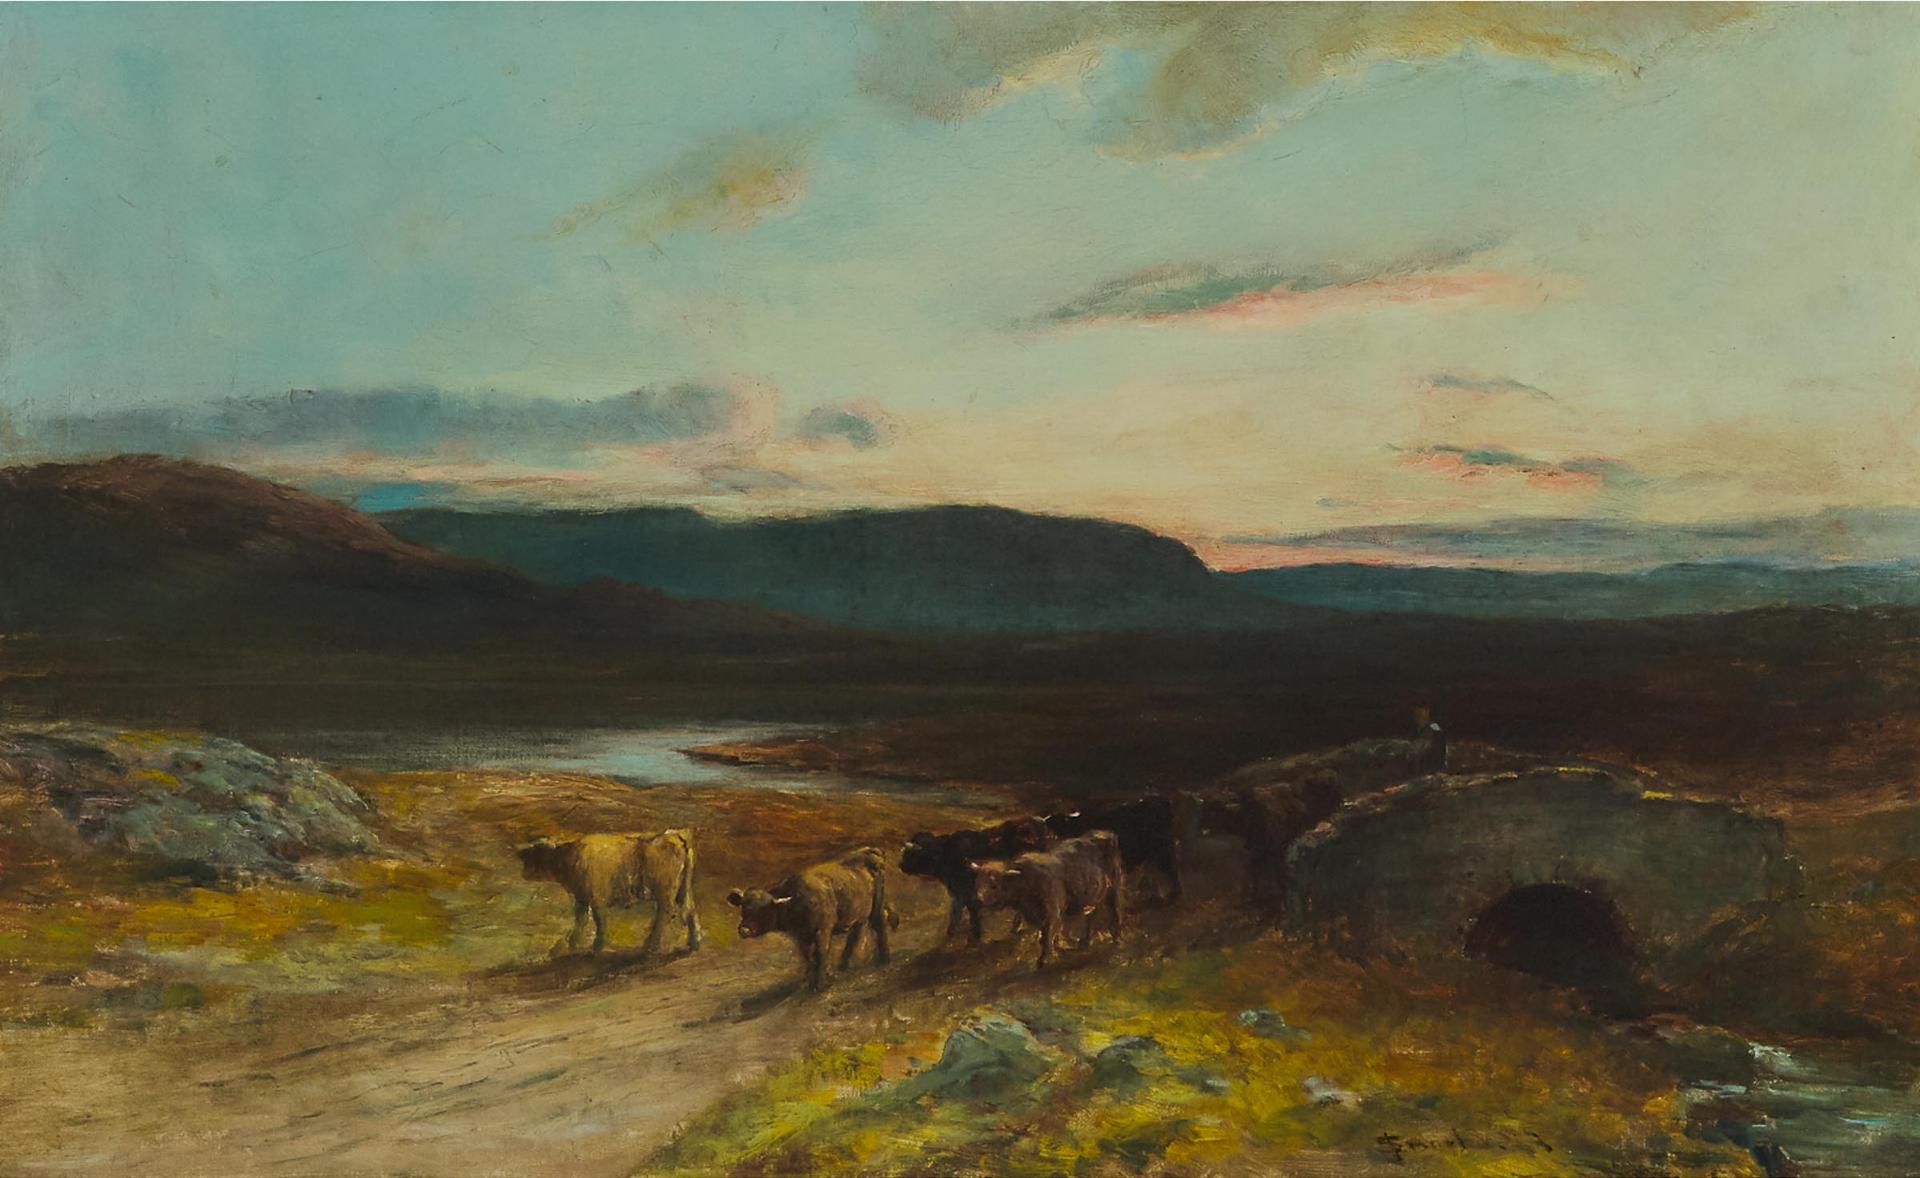 John Smart (1838-1899) - The Drove Road, Twilight